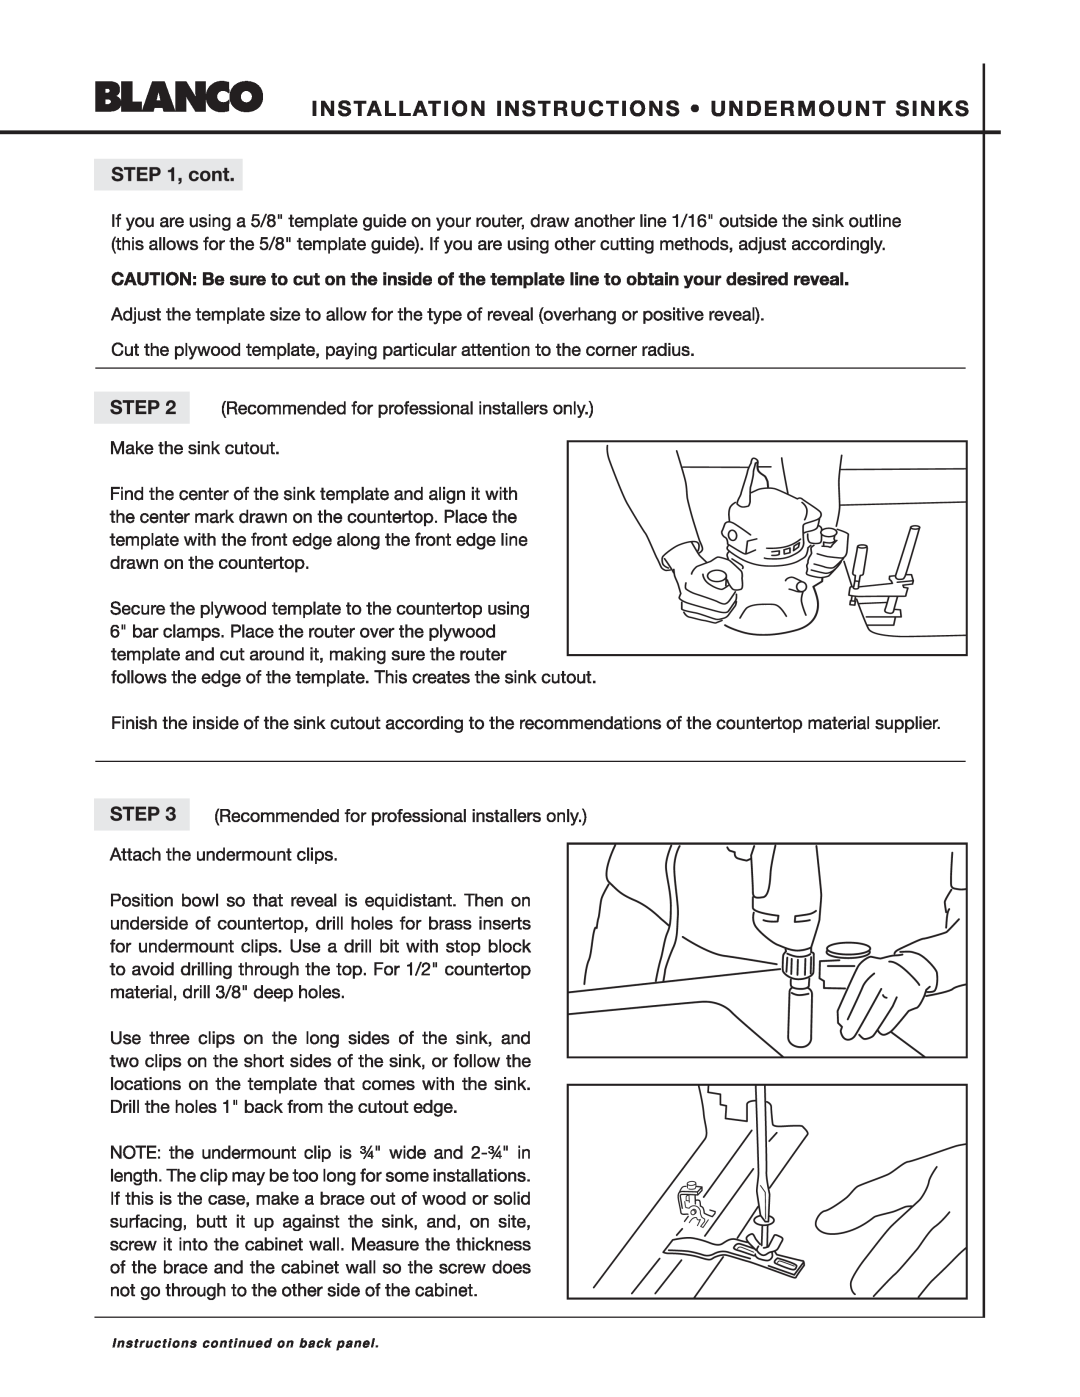 Blanco Undermount Sinks manual 